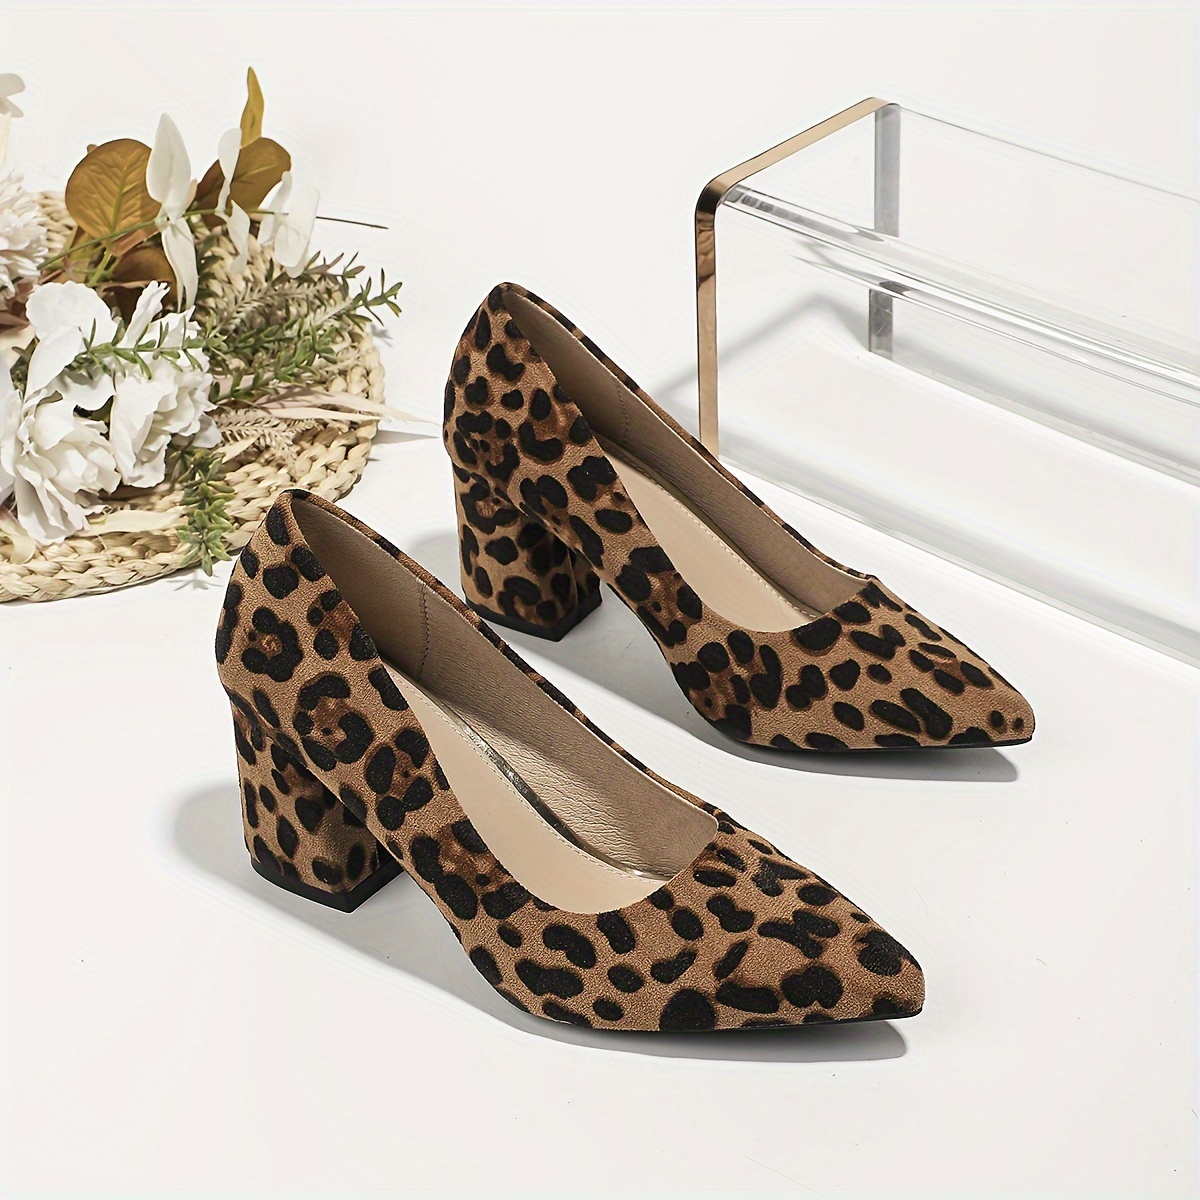 

Women's Leopard Print Block Heels, Fashion Point Toe Dress Pumps, Stylish Slip On Heels